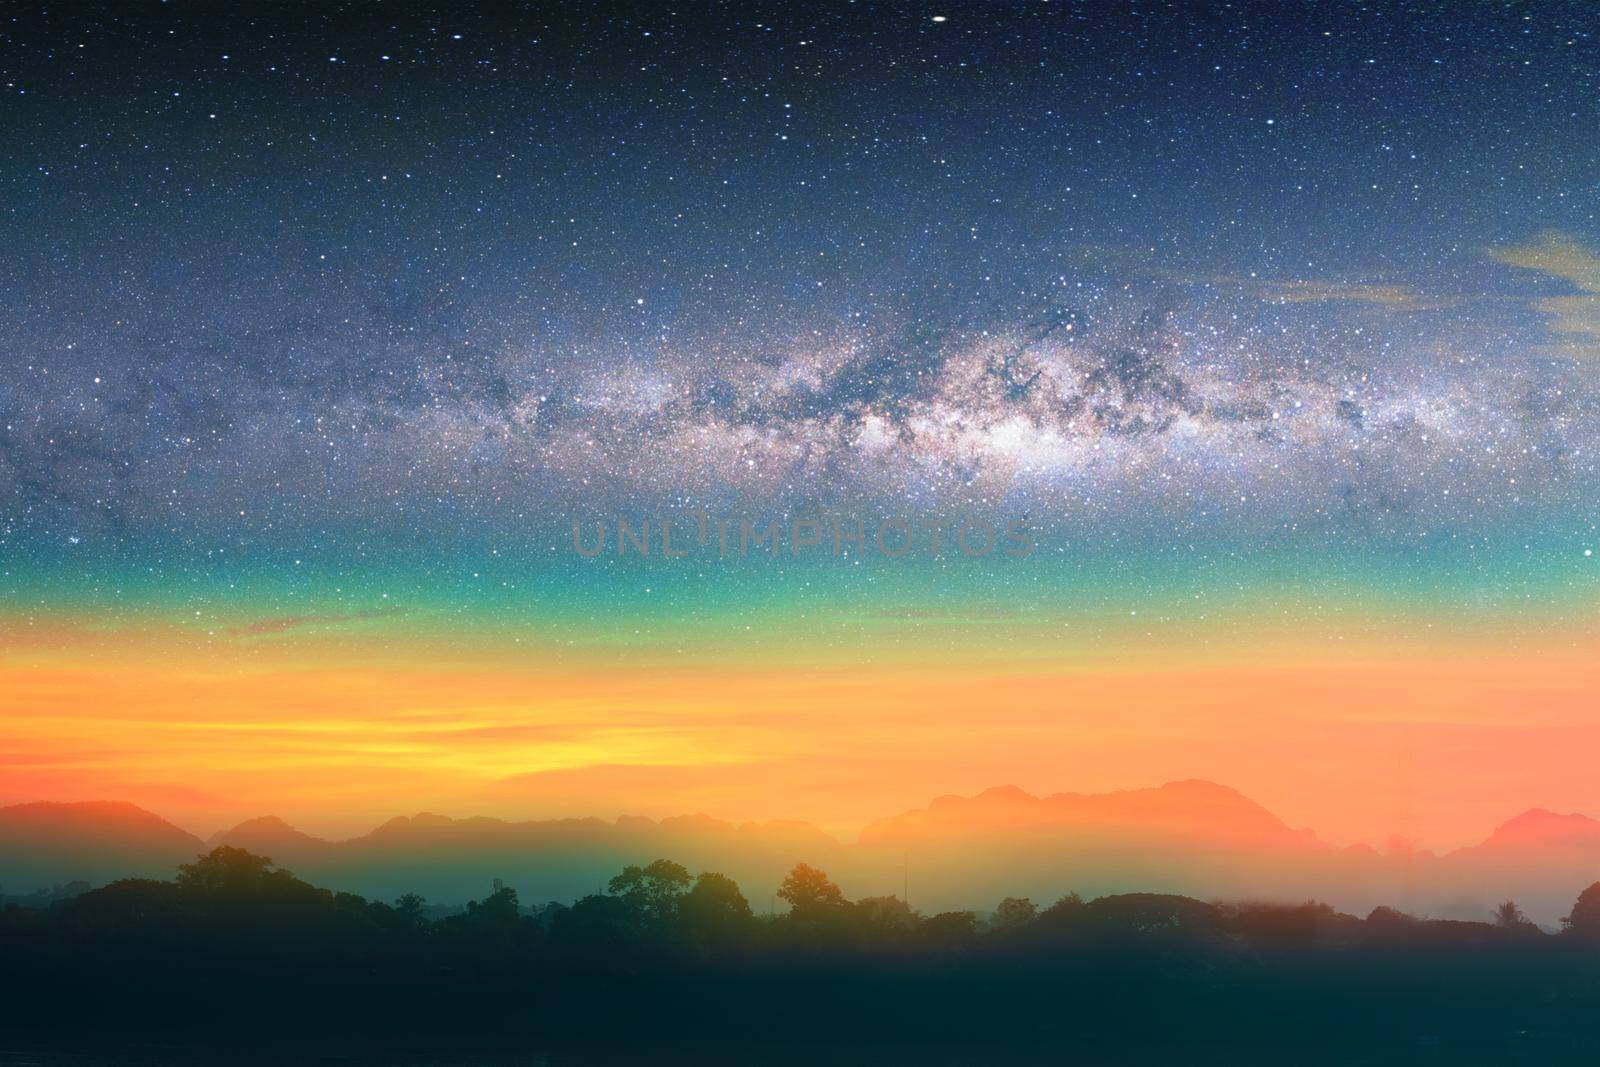 Milky way night landscape sunset rainbow light over silhouette mountain by Darkfox